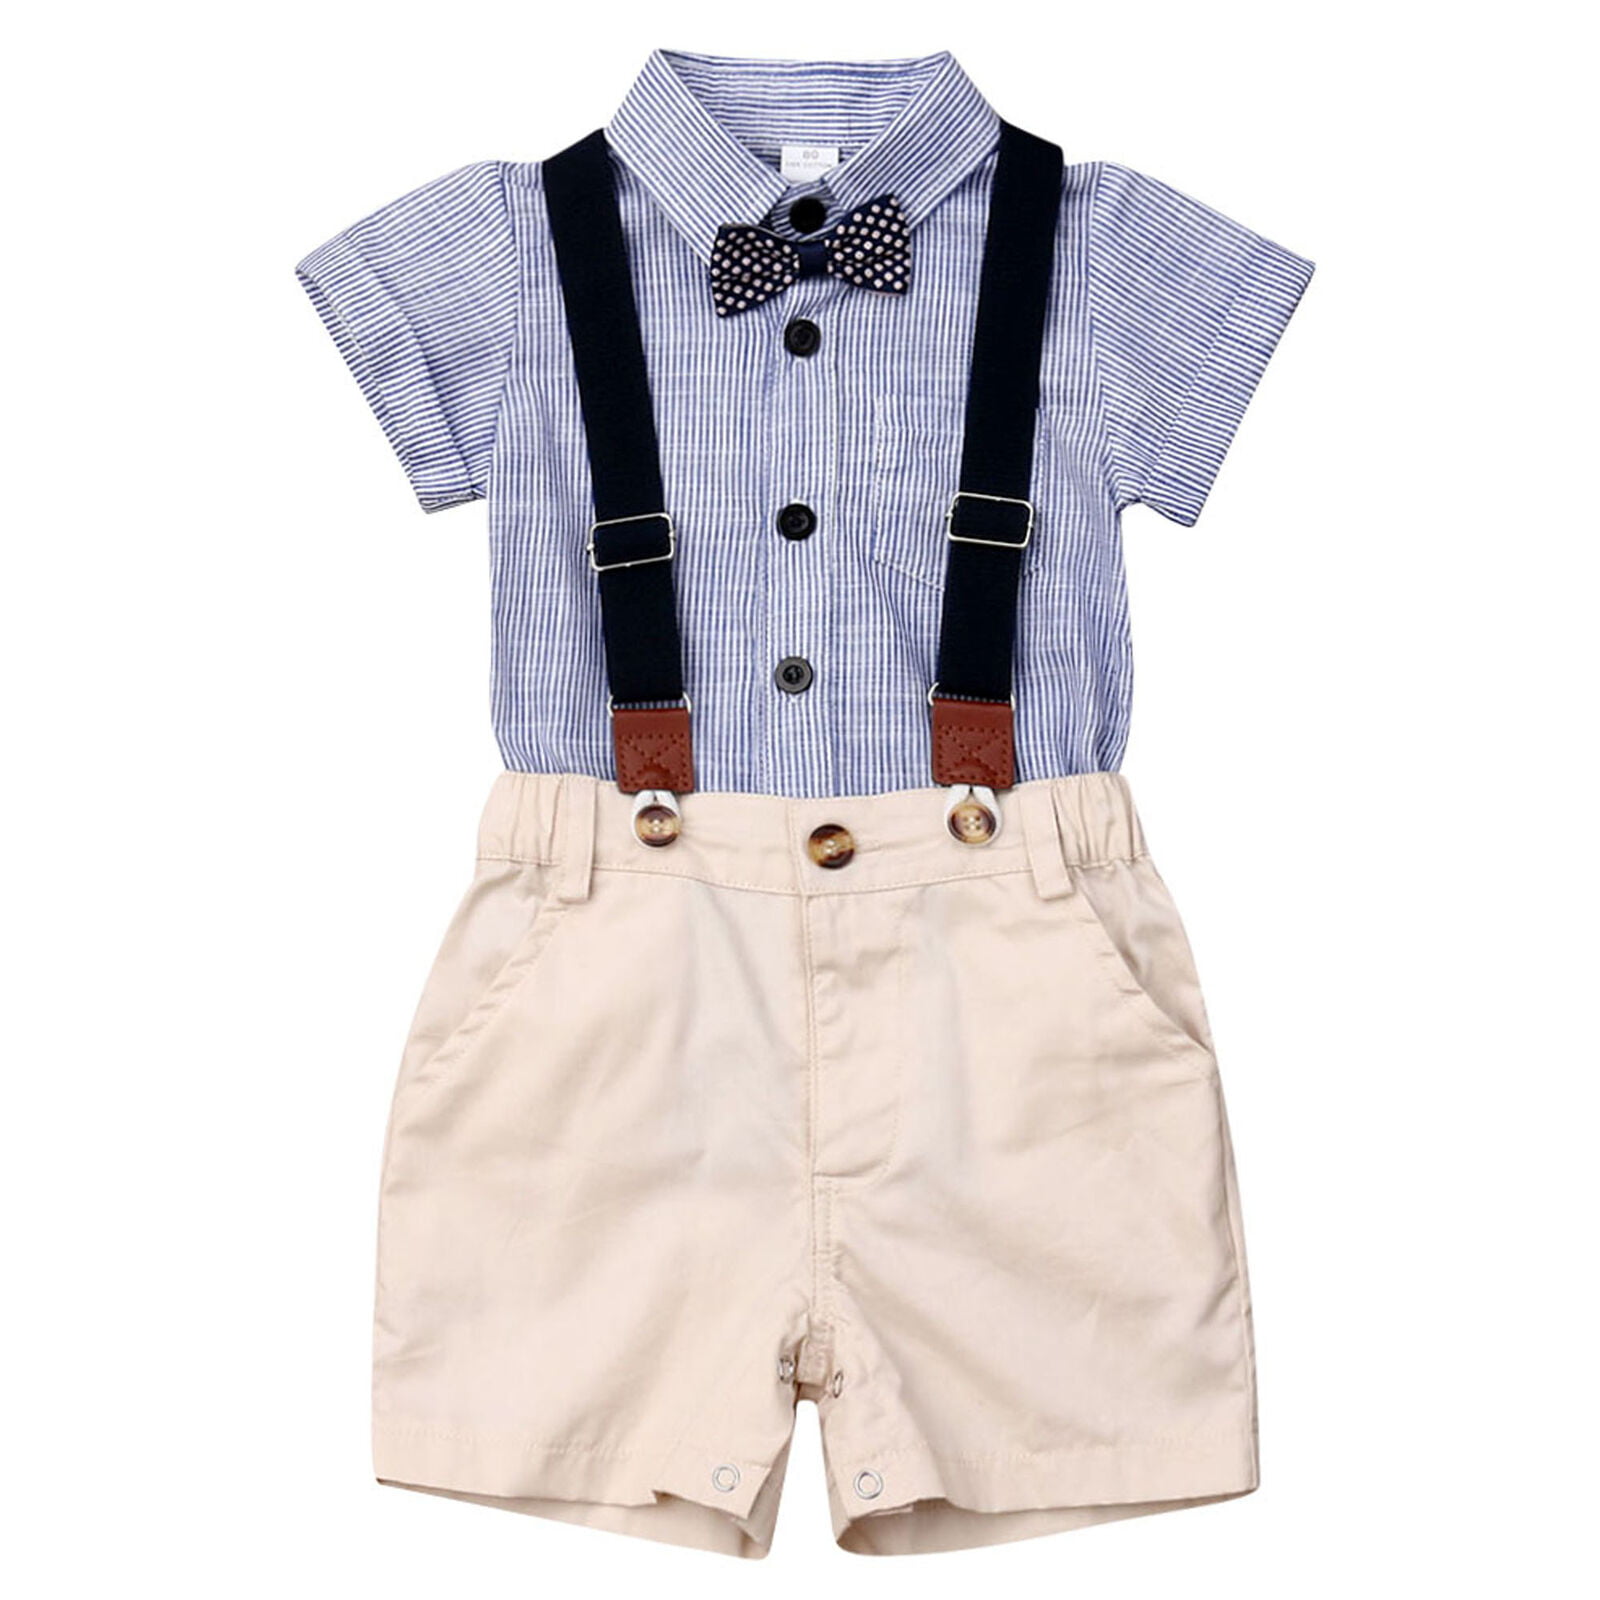 SSZZoo 2PC Short Gentleman Suit Infant Baby Boy Bow Tie Shirt Suspenders Shorts Pants Outfit Set